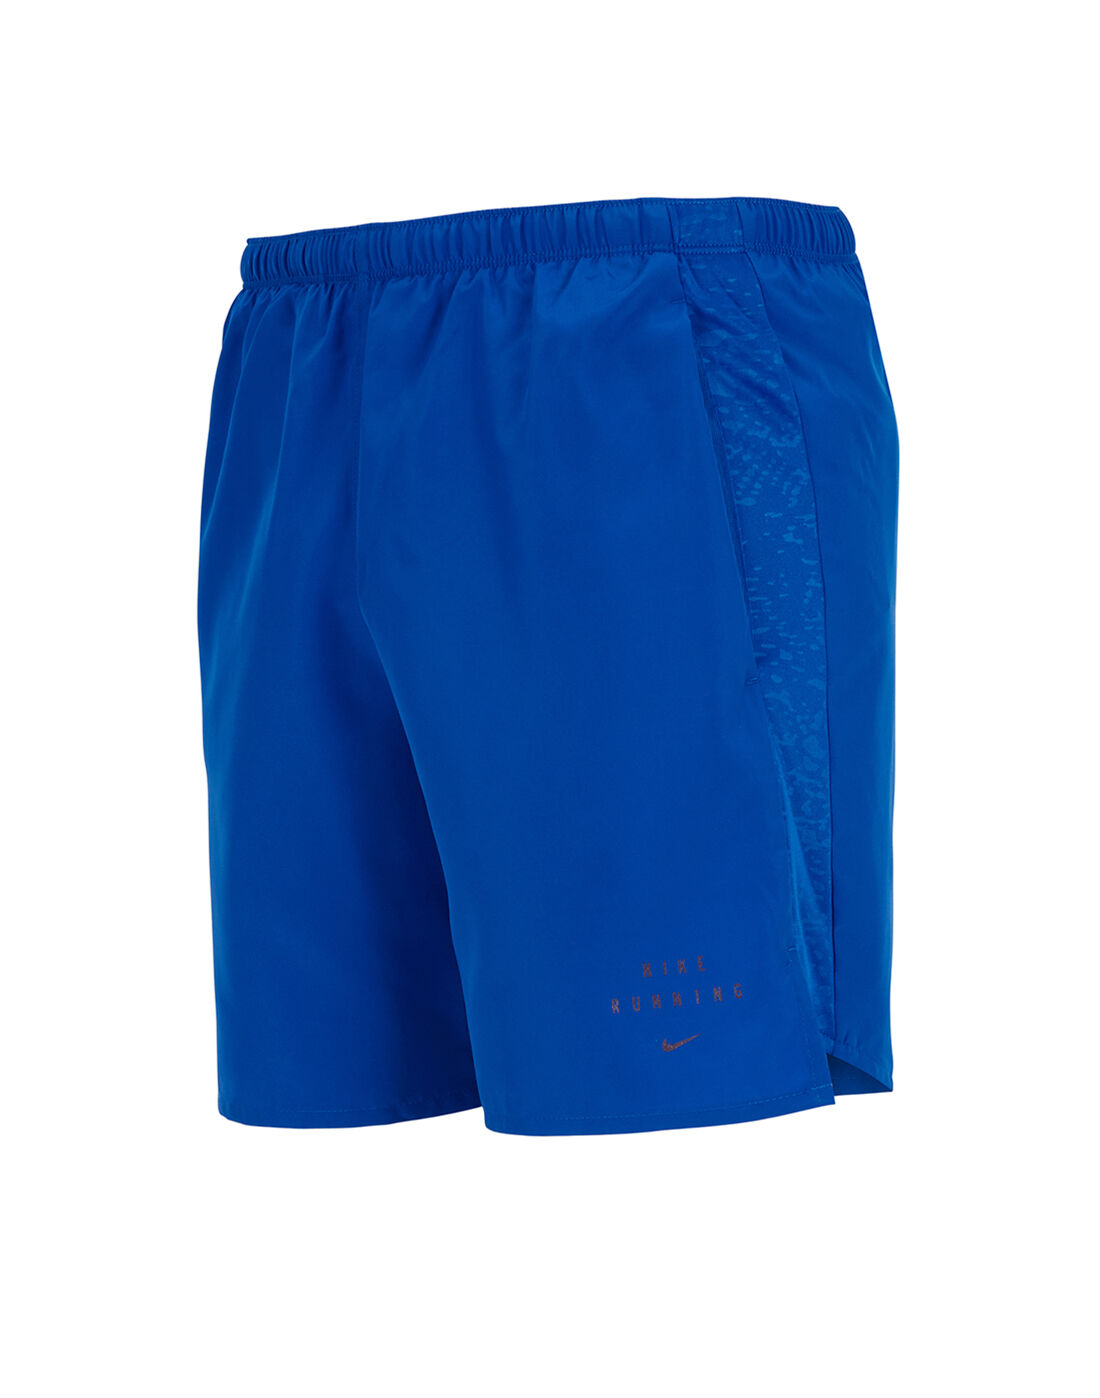 nike challenger shorts 7 blue